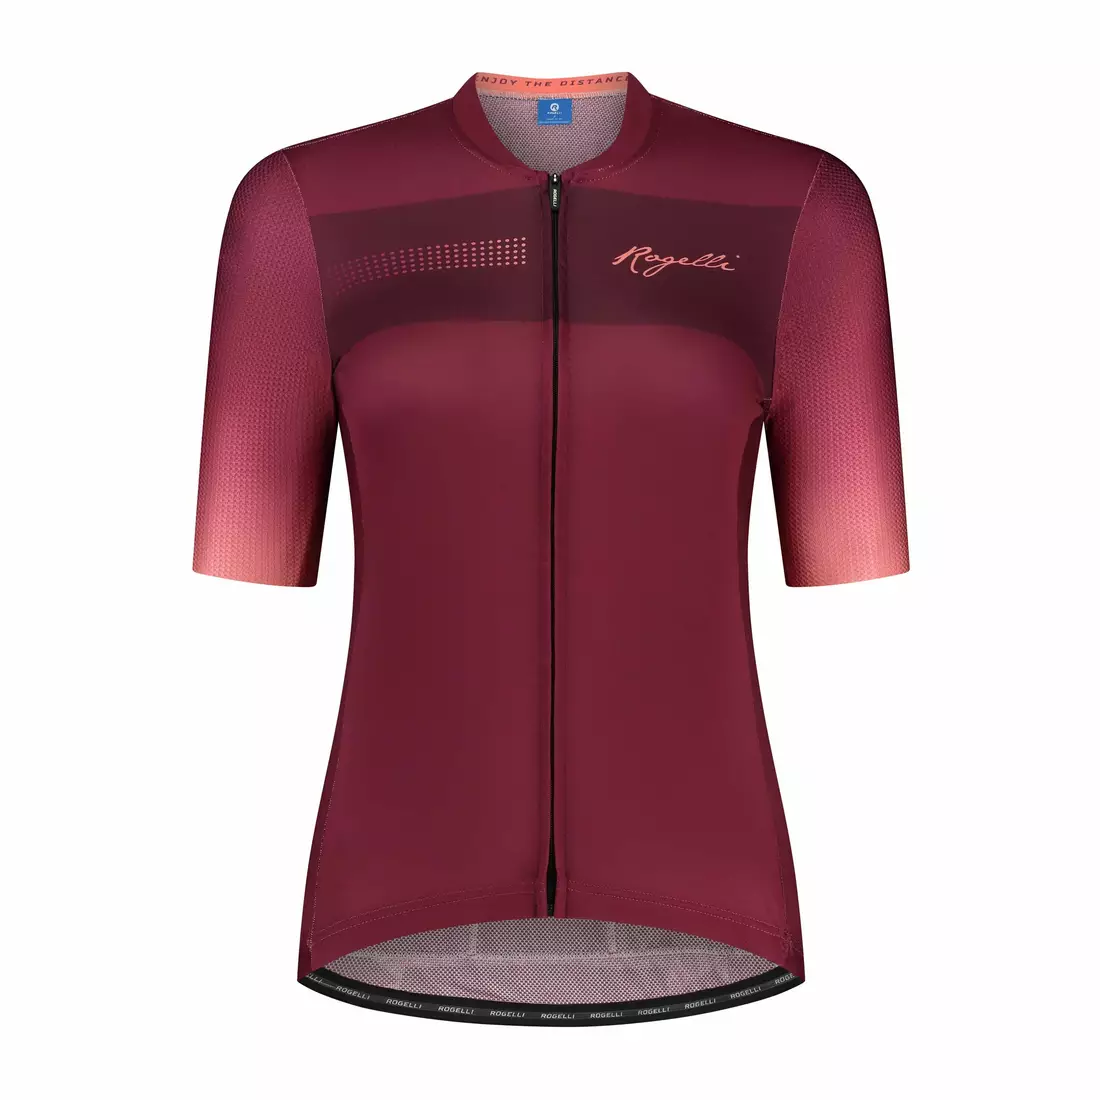 ROGELLI DAWN dámský cyklistický dres, kaštanově-korálový